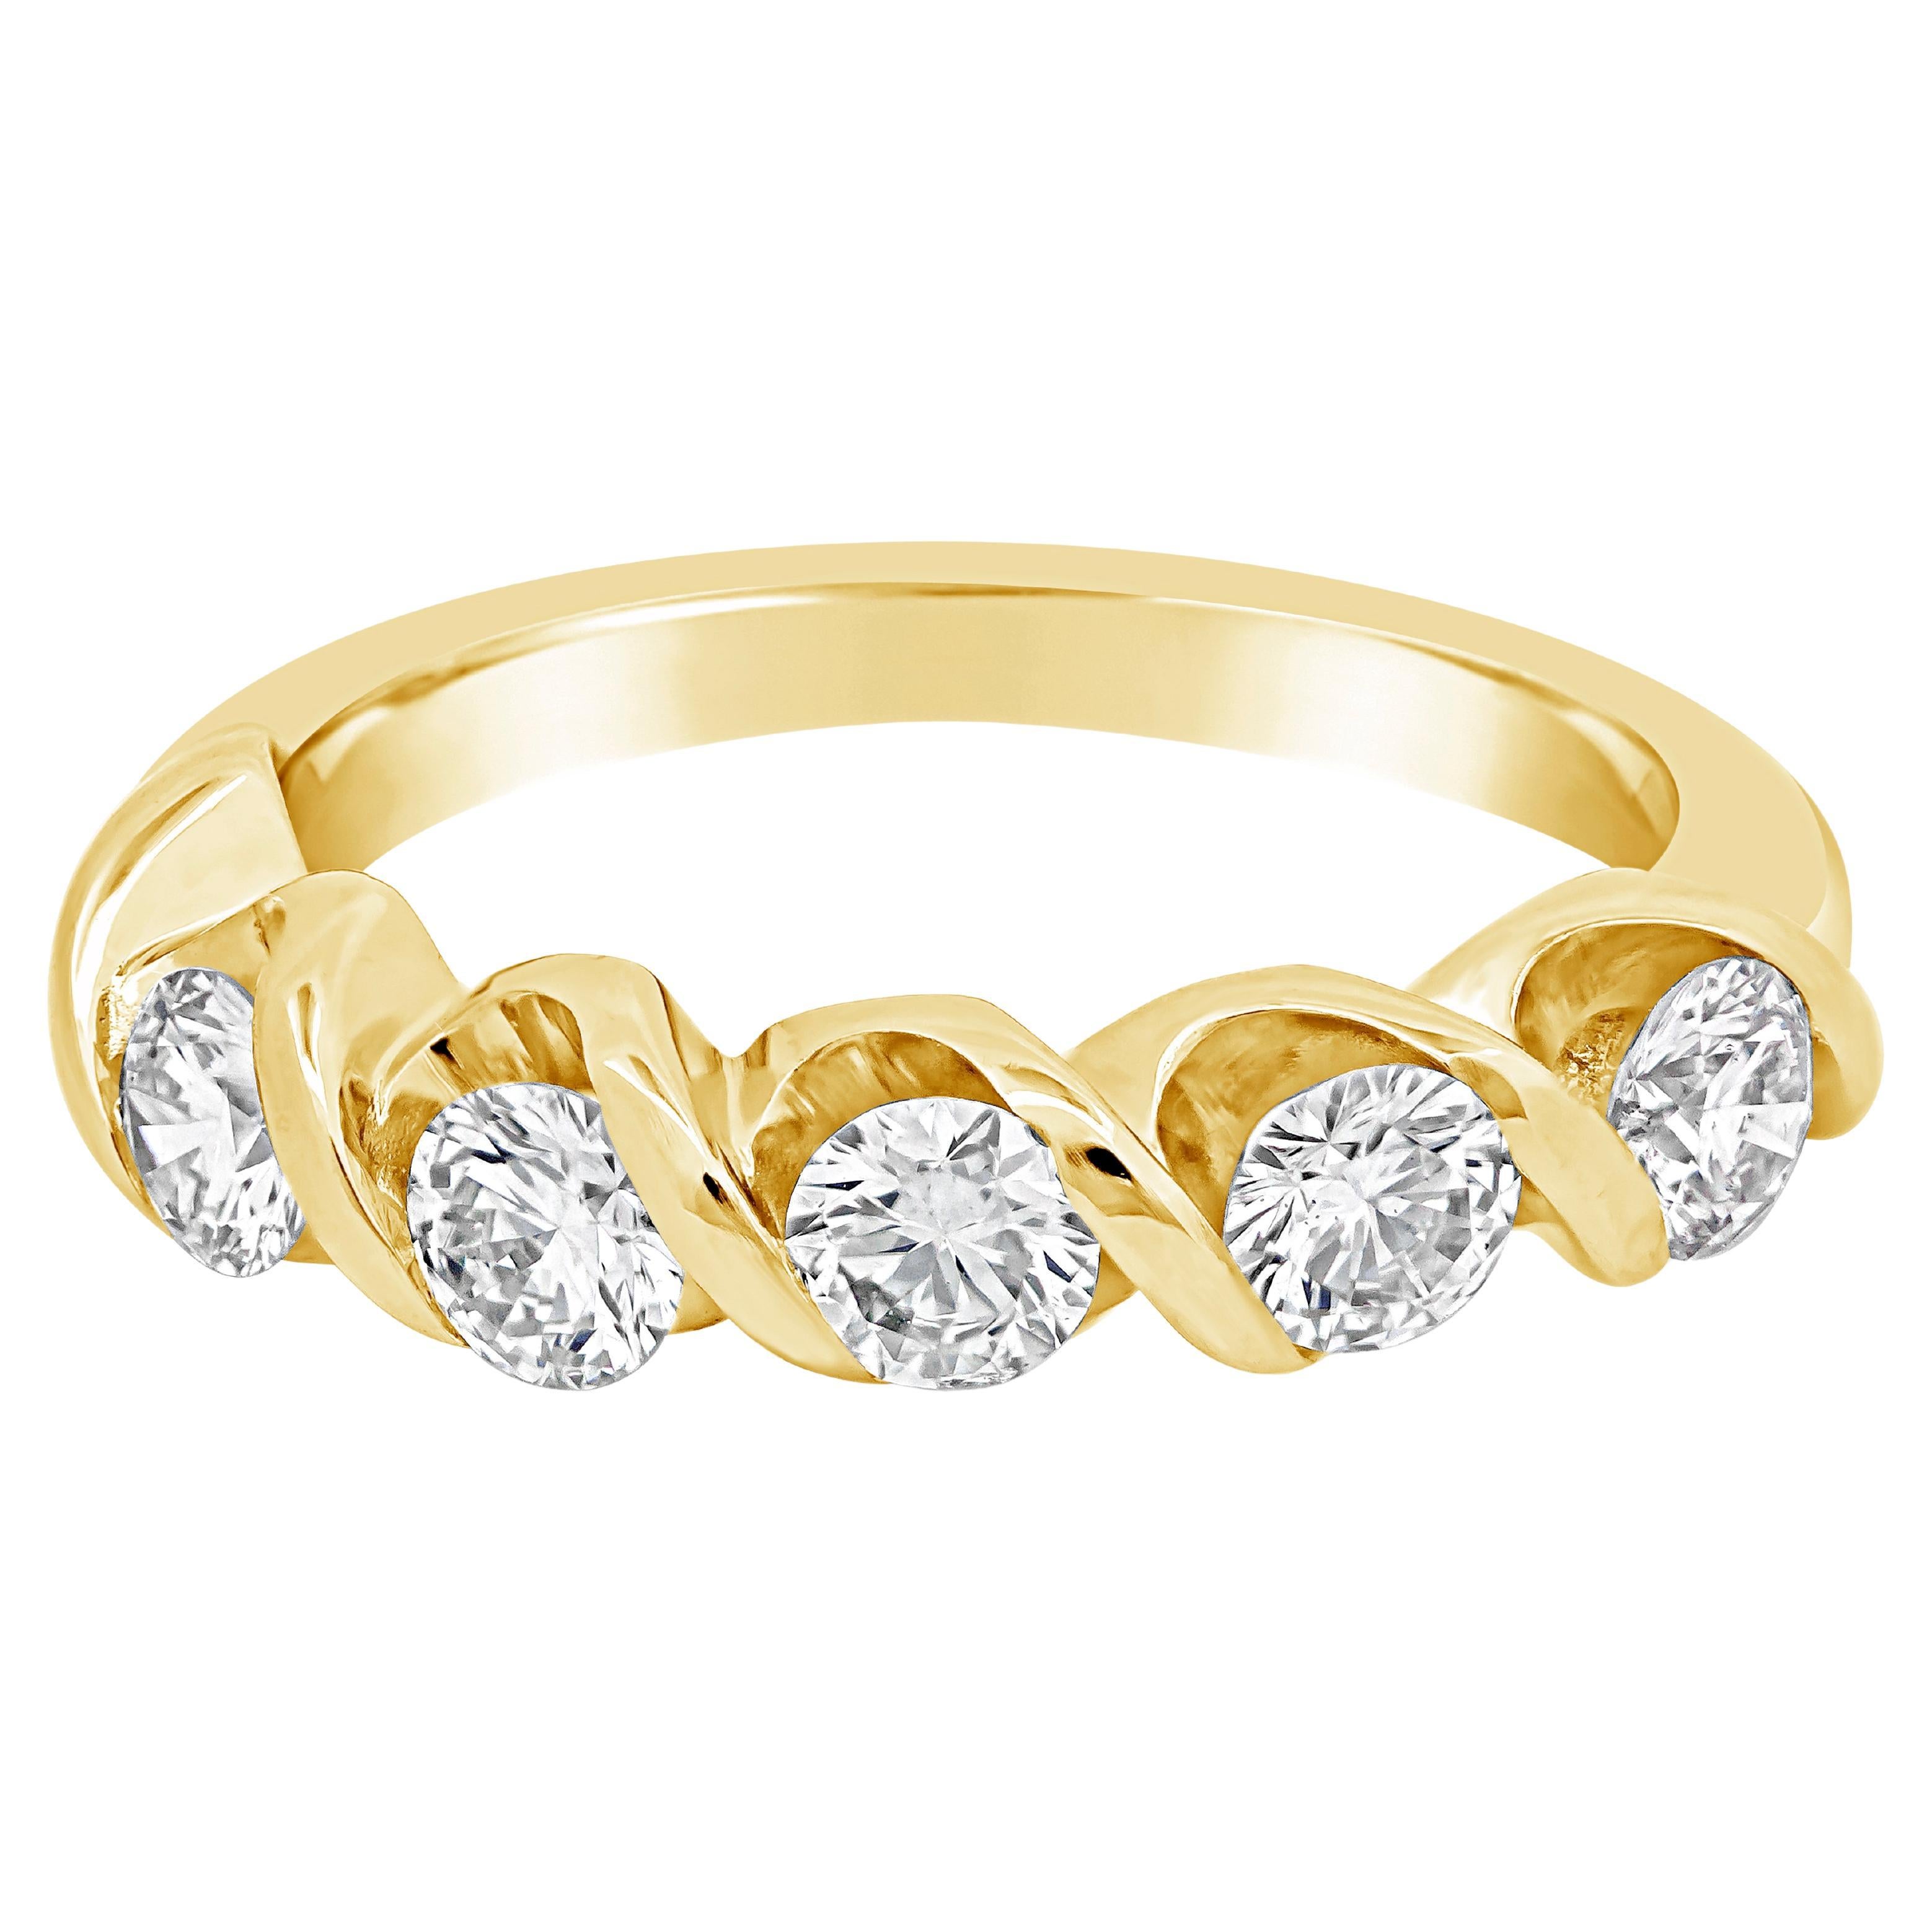 Roman Malakov 1.01 Carats Total Round Diamond Five-Stone Twisting Wedding Band